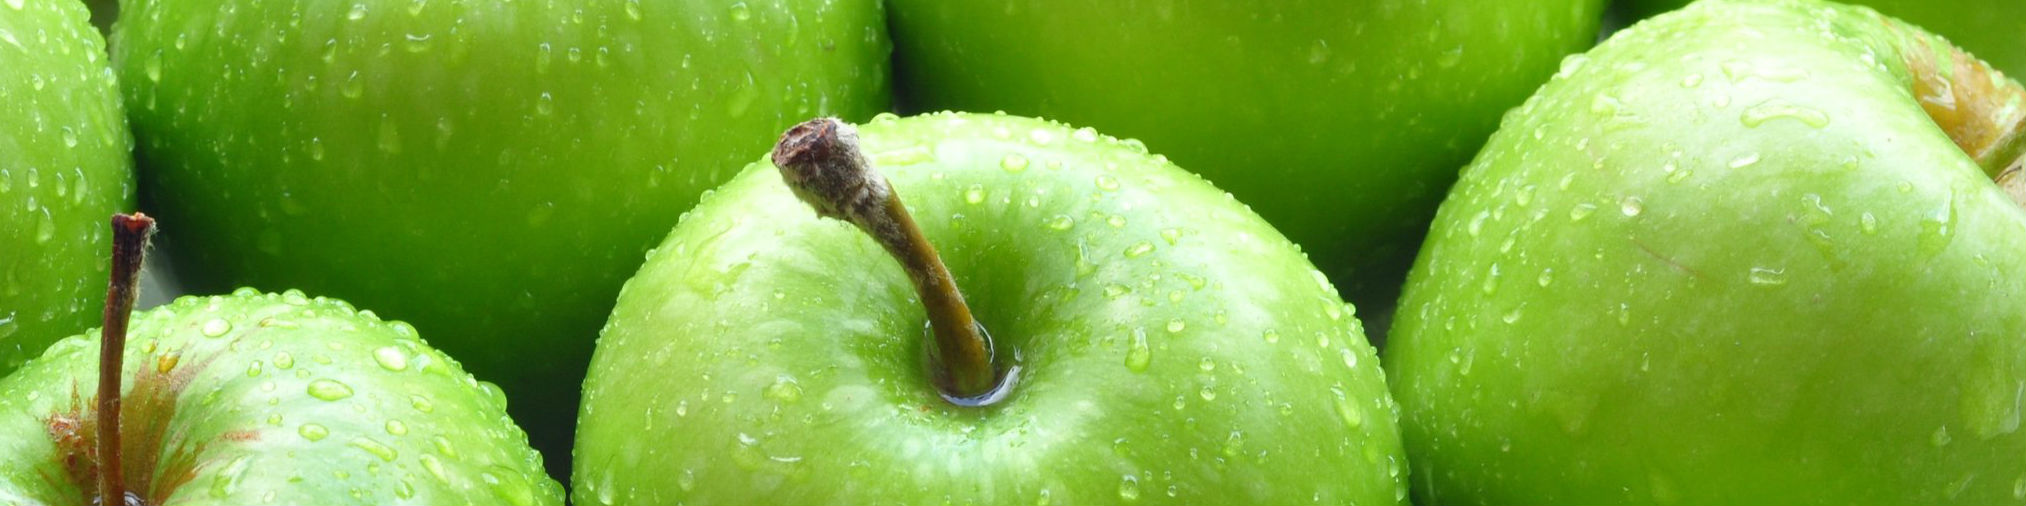 Green apple - NARROW BANNER